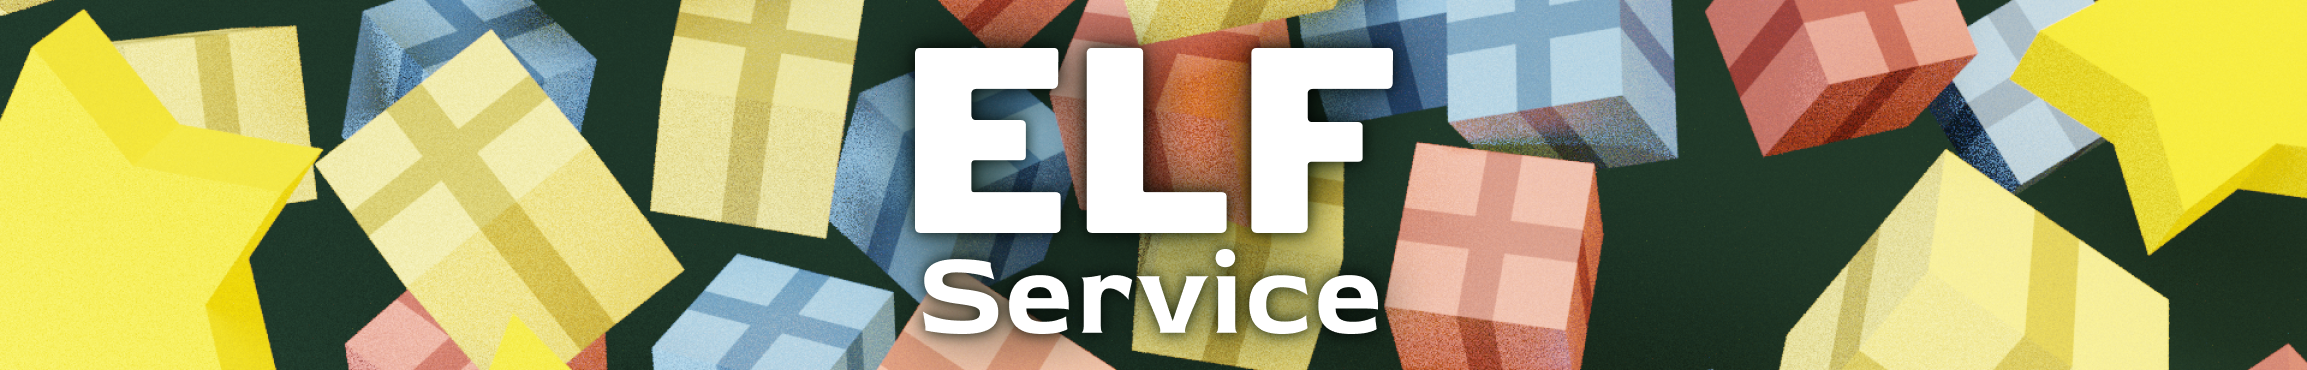 Elf Service